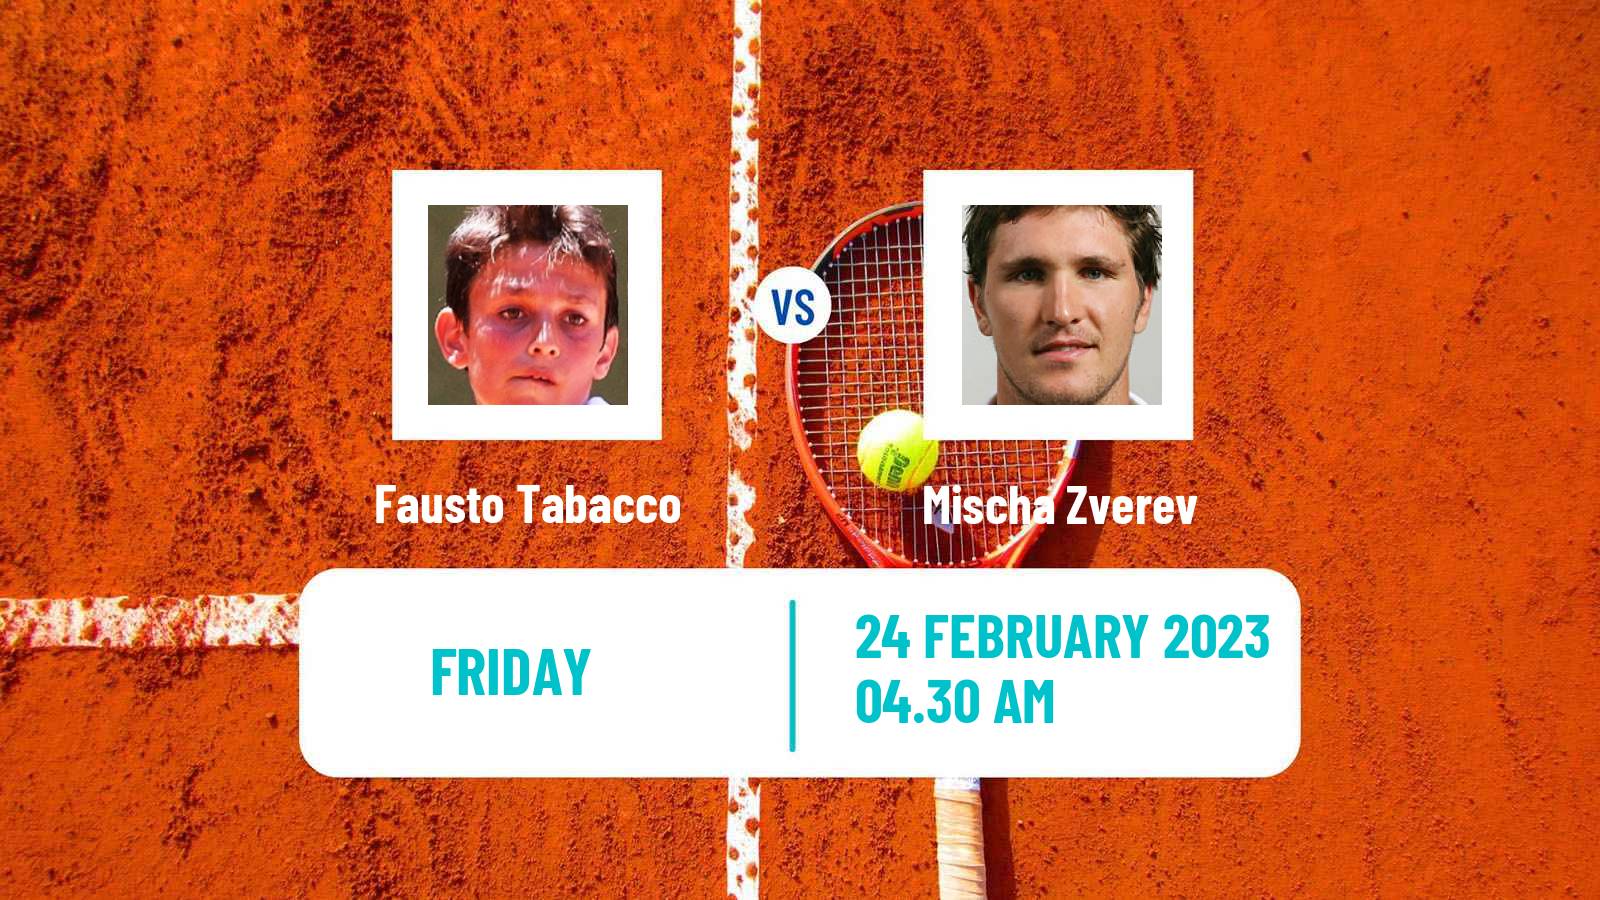 Tennis ITF Tournaments Fausto Tabacco - Mischa Zverev